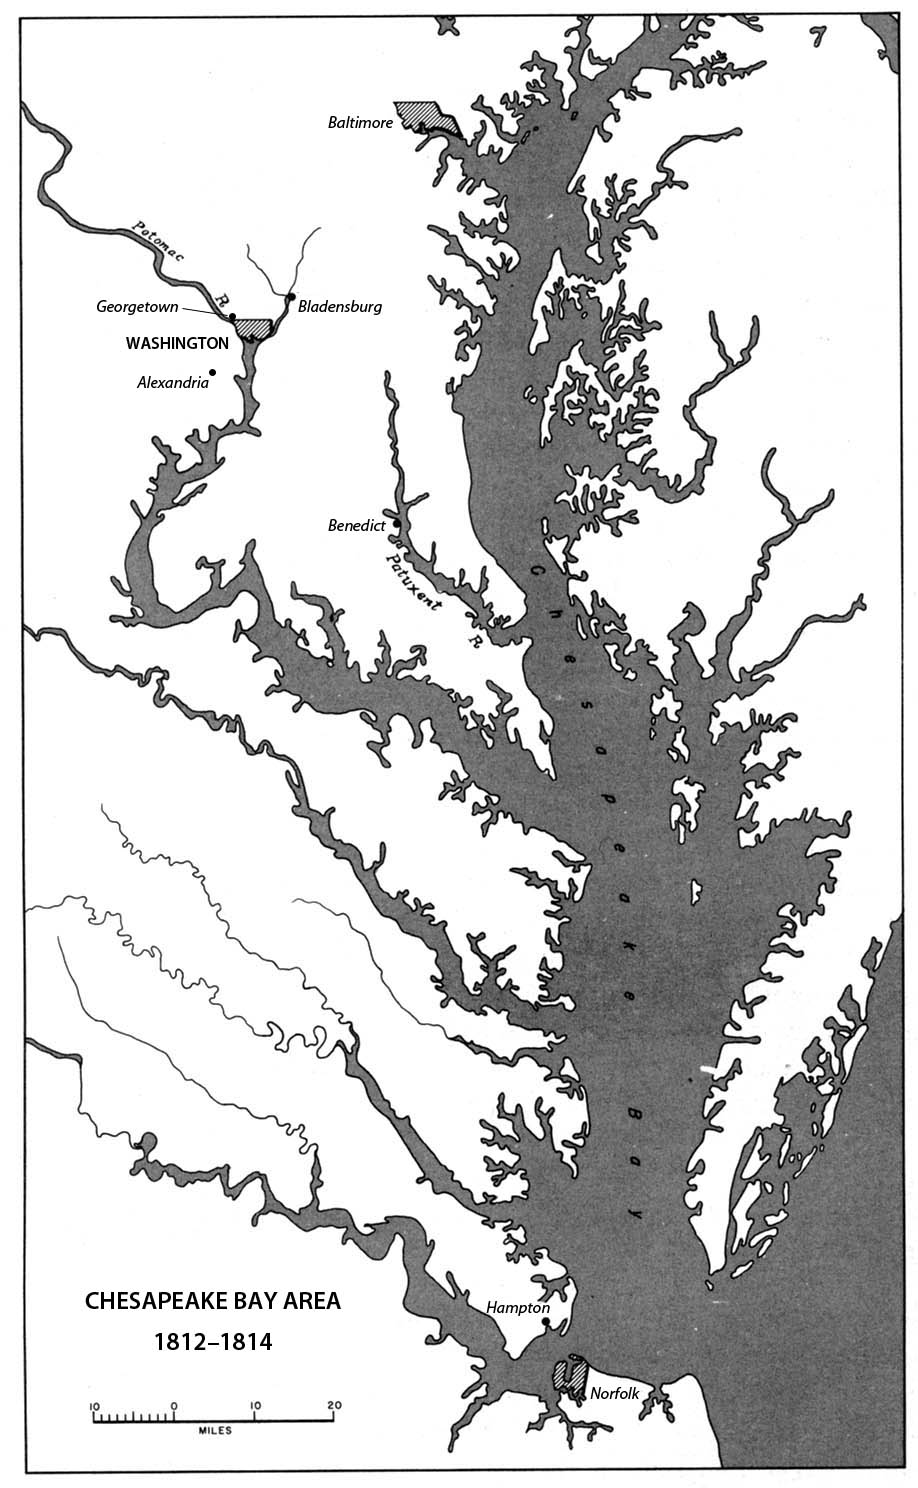 Chesapeake Bay area, 1812-1814